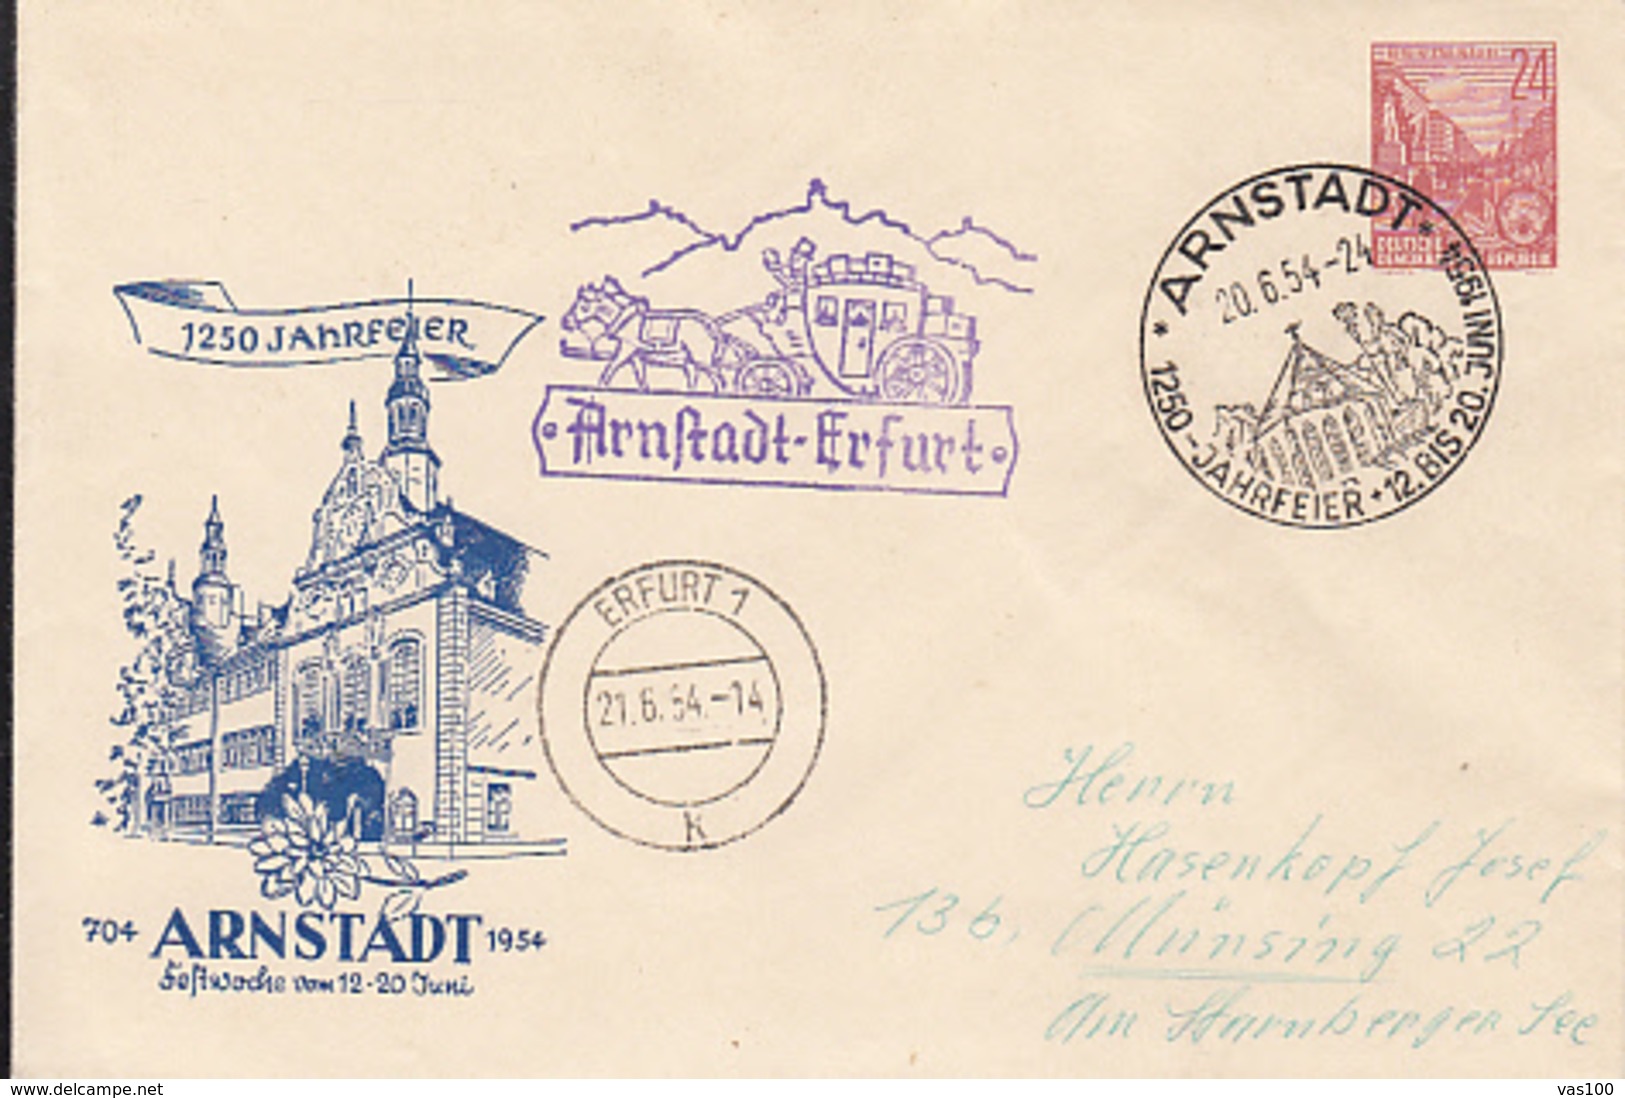 ARNSTADT TOWN ANNIVERSARY, 5 YEAR PLANS, COVER STATIONERY, ENTIER POSTAL, 1954, GERMANY - Umschläge - Gebraucht